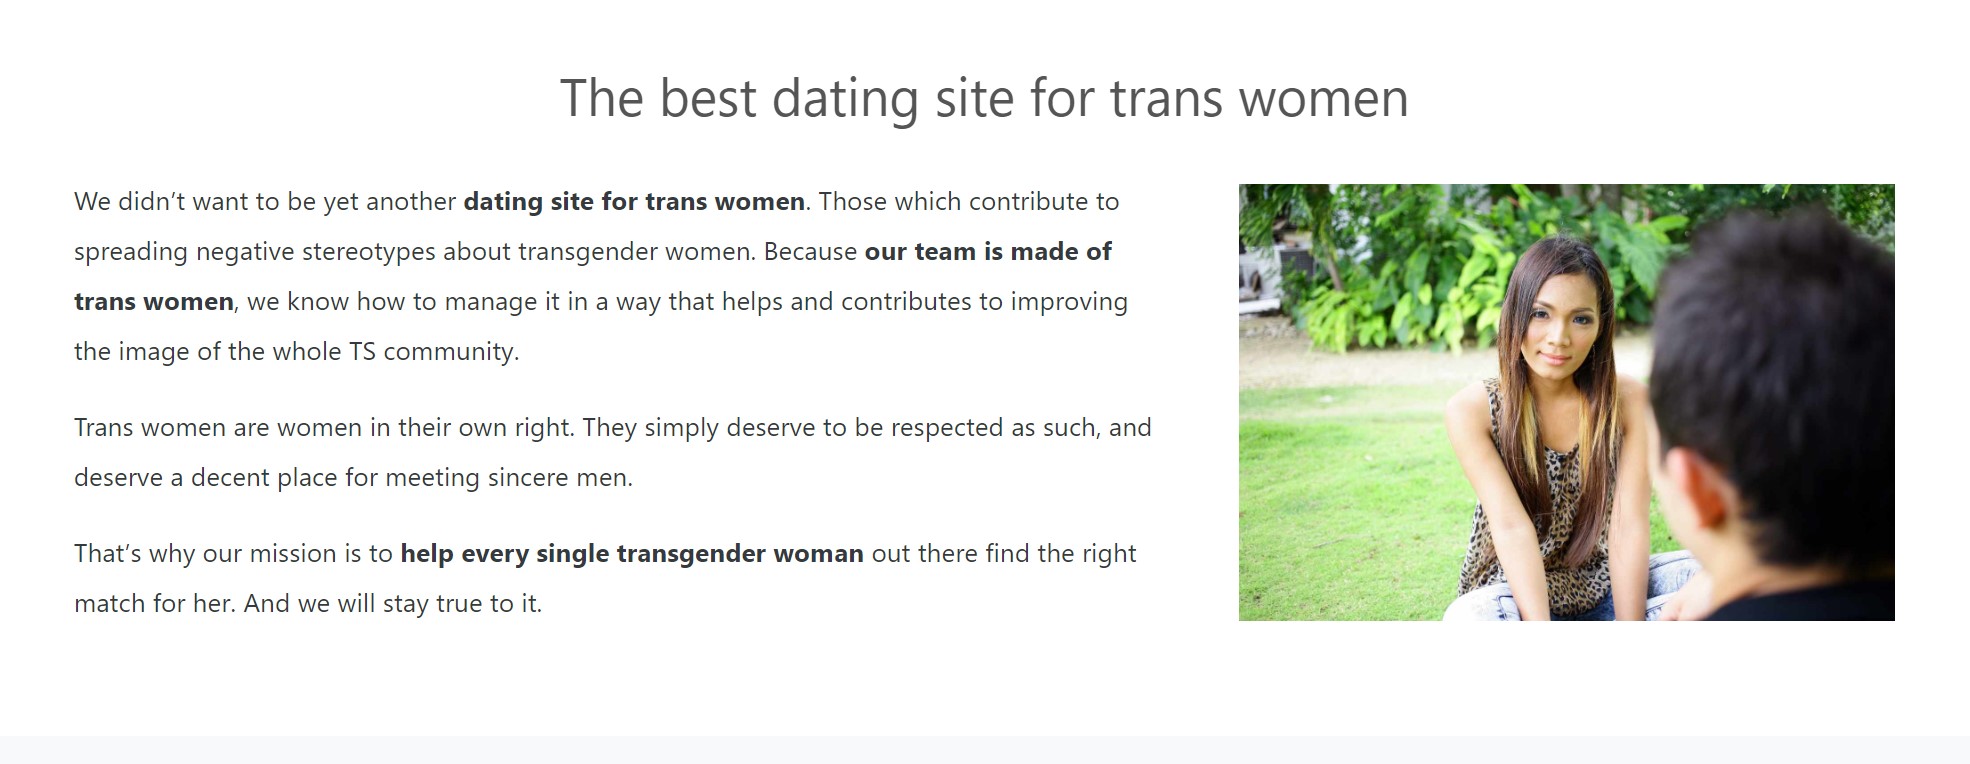 Transgender dating